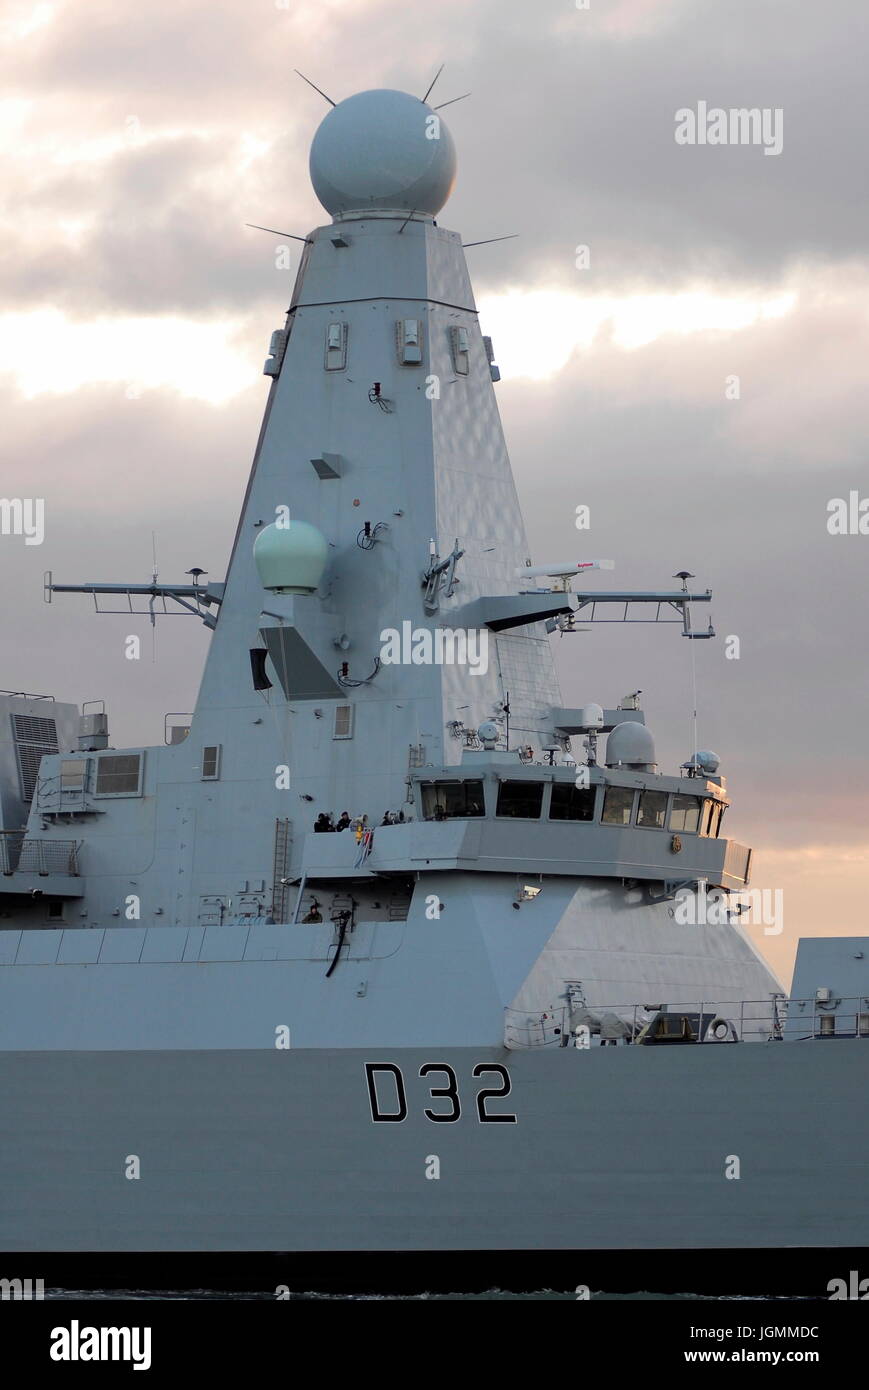 AJAXNETPHOTO. 5. DEZEMBER 2014. PORTSMOUTH, ENGLAND. -ZERSTÖRER KOMMT - HMS DARING (TYPE 45) EINGABE HAFEN BEI SONNENUNTERGANG. FOTO: TONY HOLLAND/AJAX REF: DTH140712 1744 Stockfoto